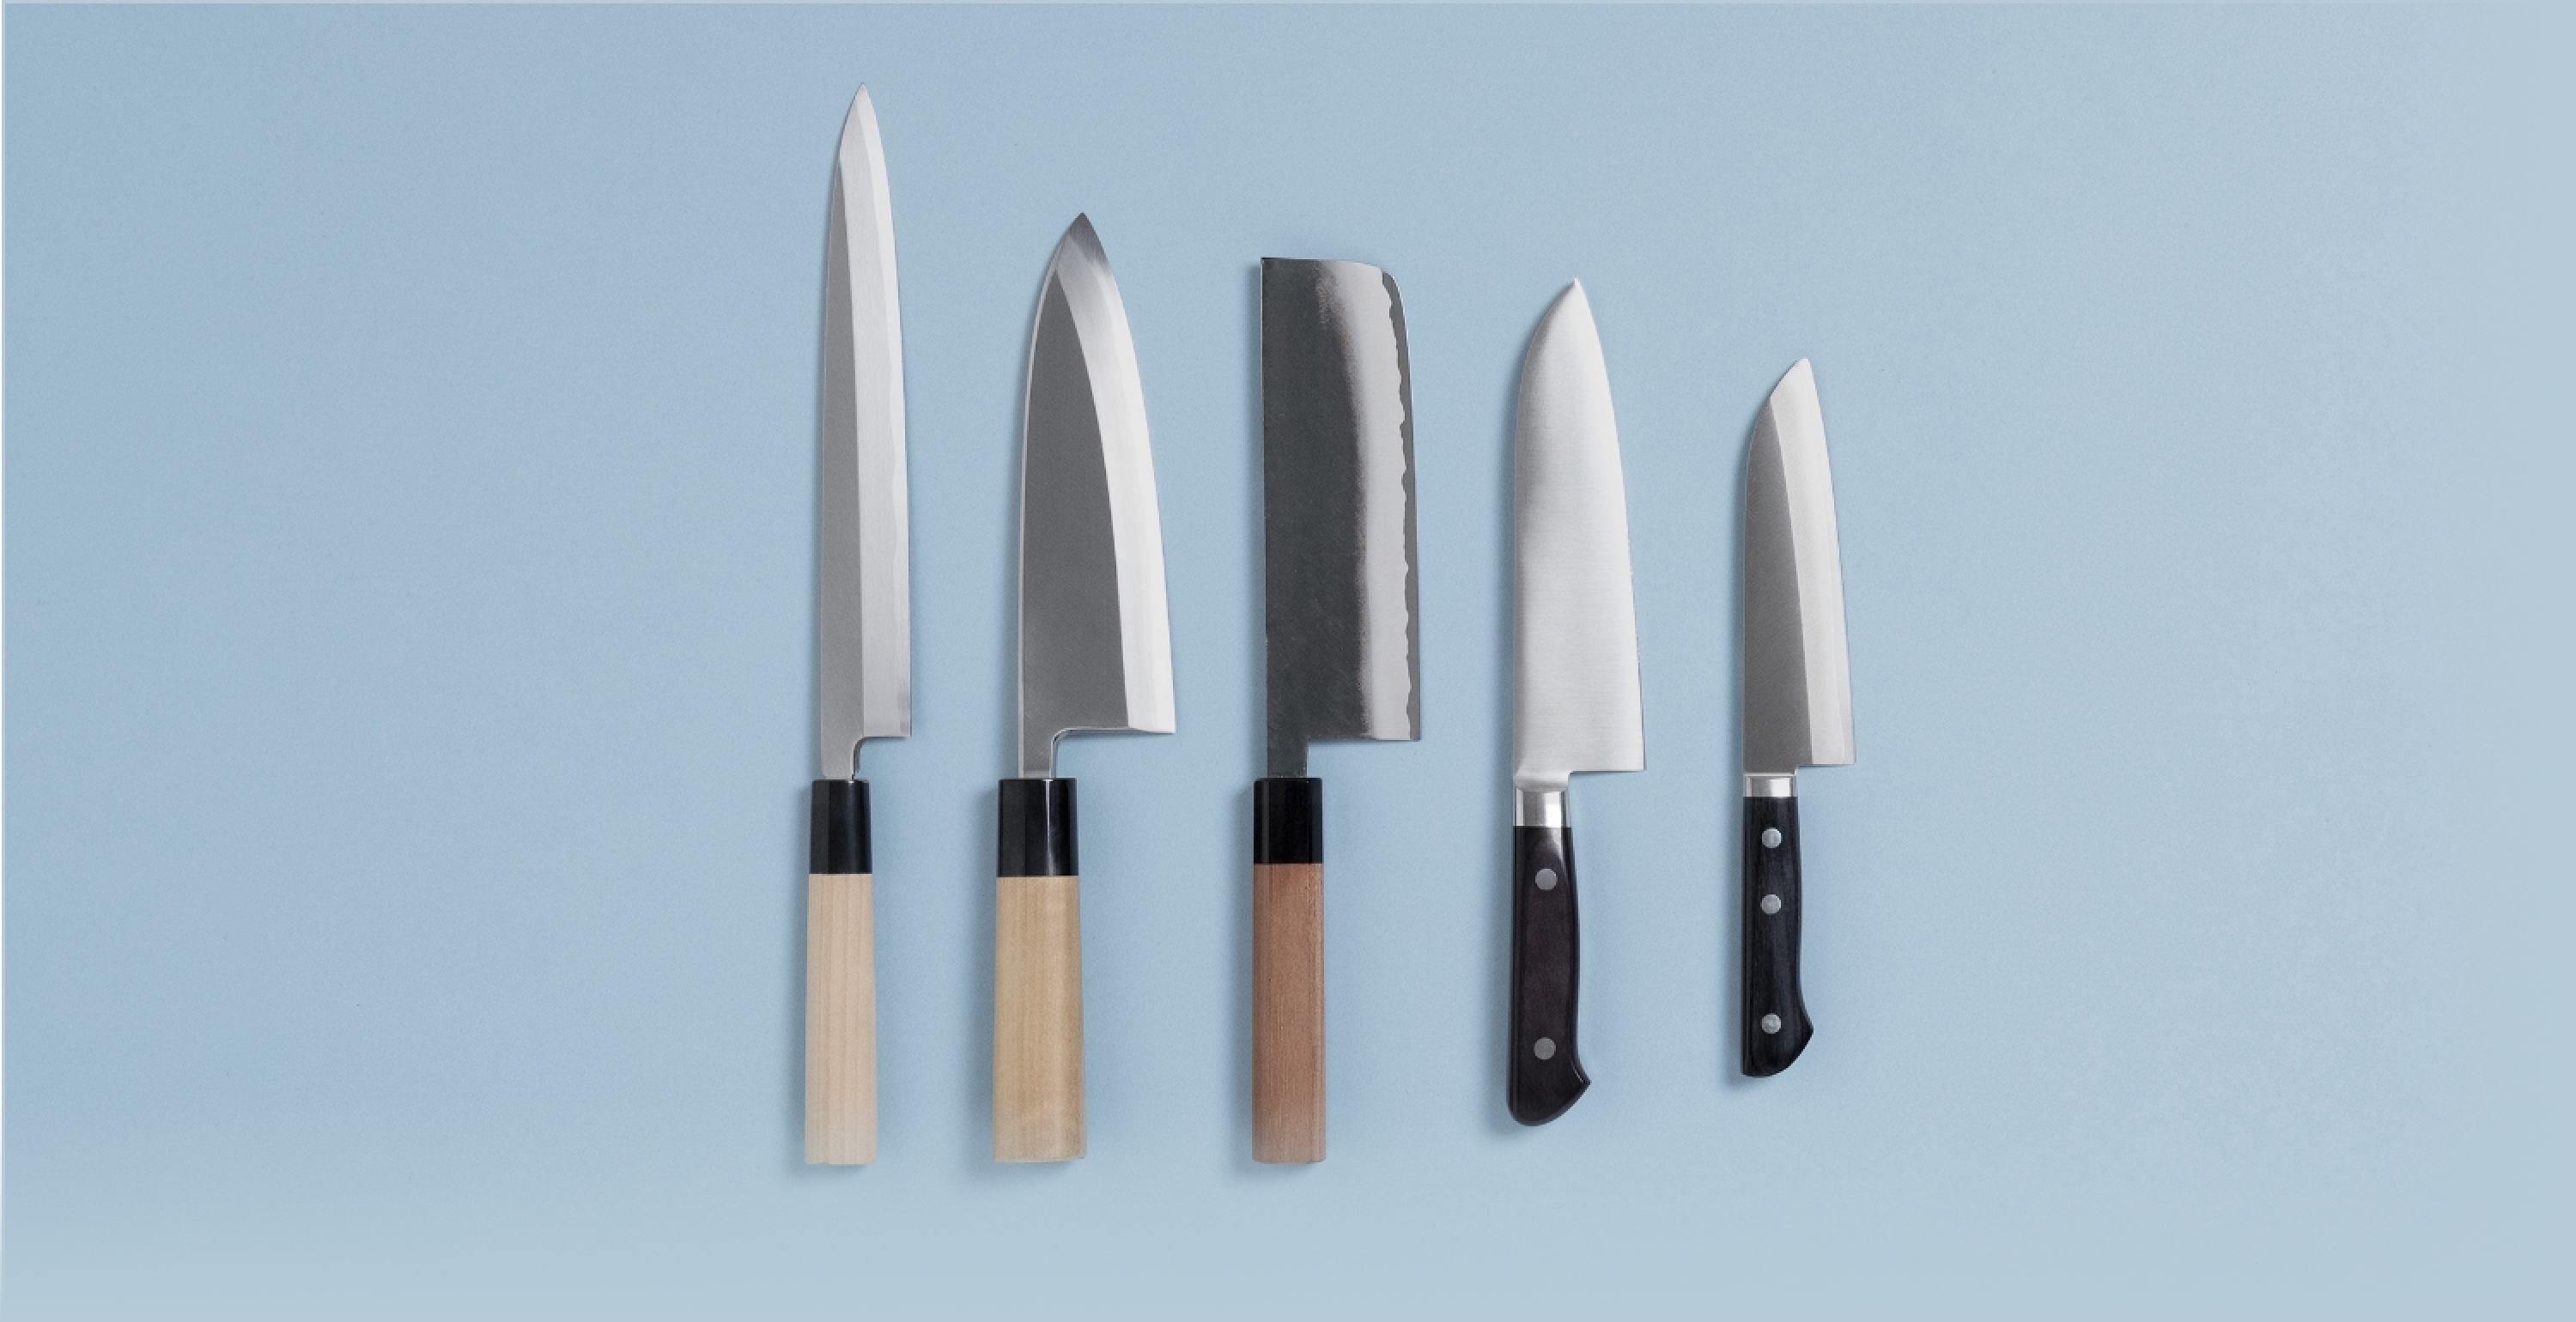 KAMA-ASA's Knives